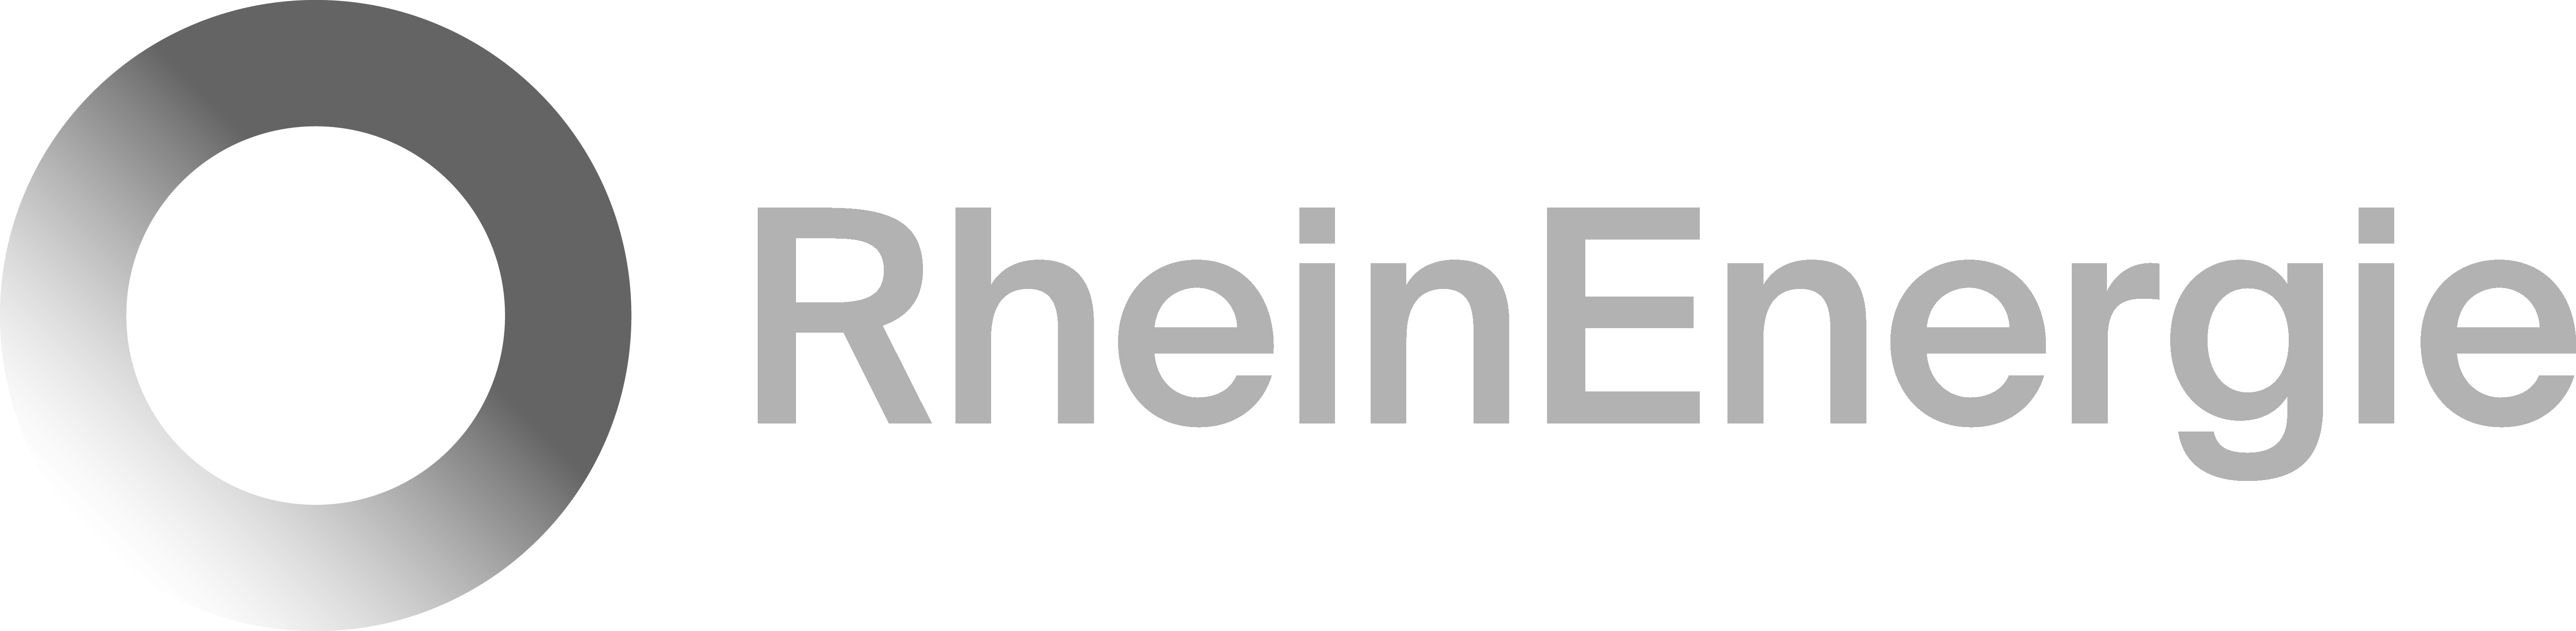 RheinEnergie_Kundenlogo_grau